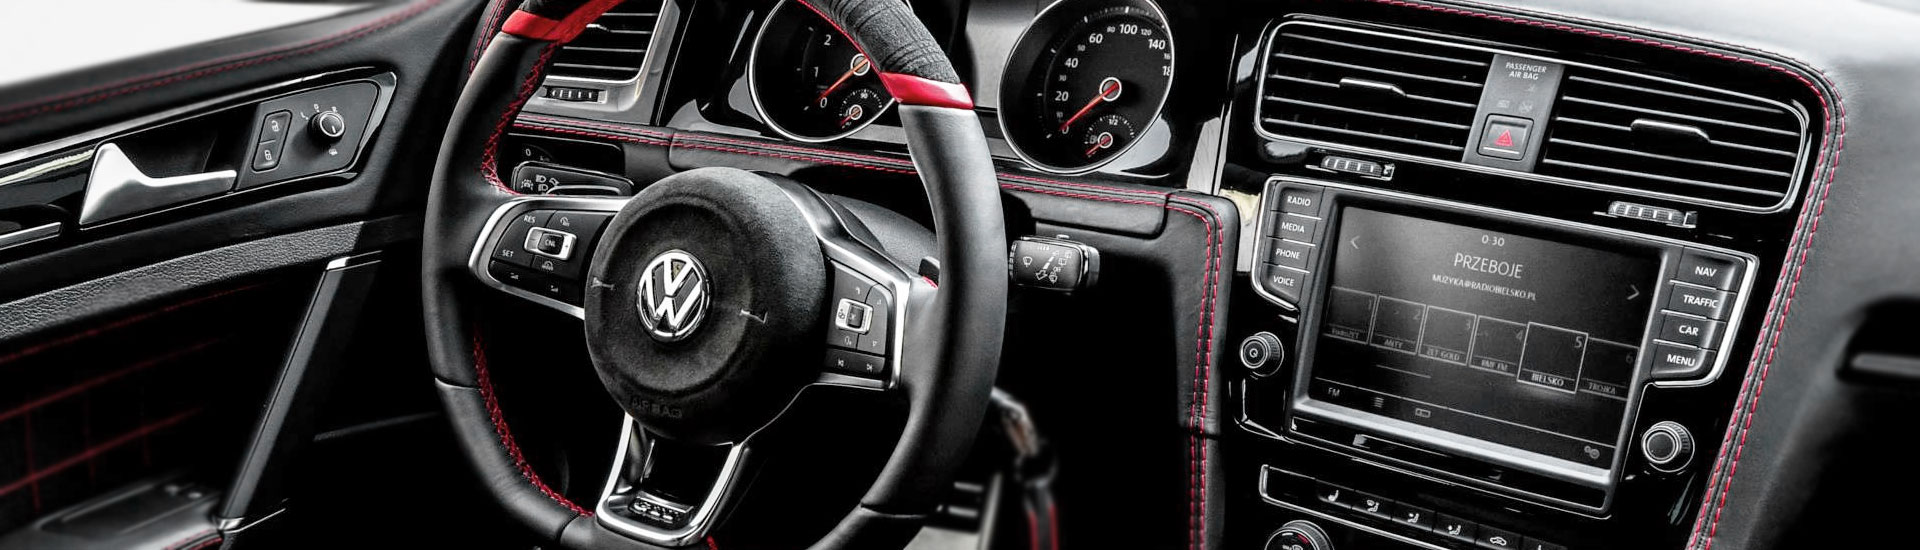 2014 Volkswagen Jetta Custom Dash Kits